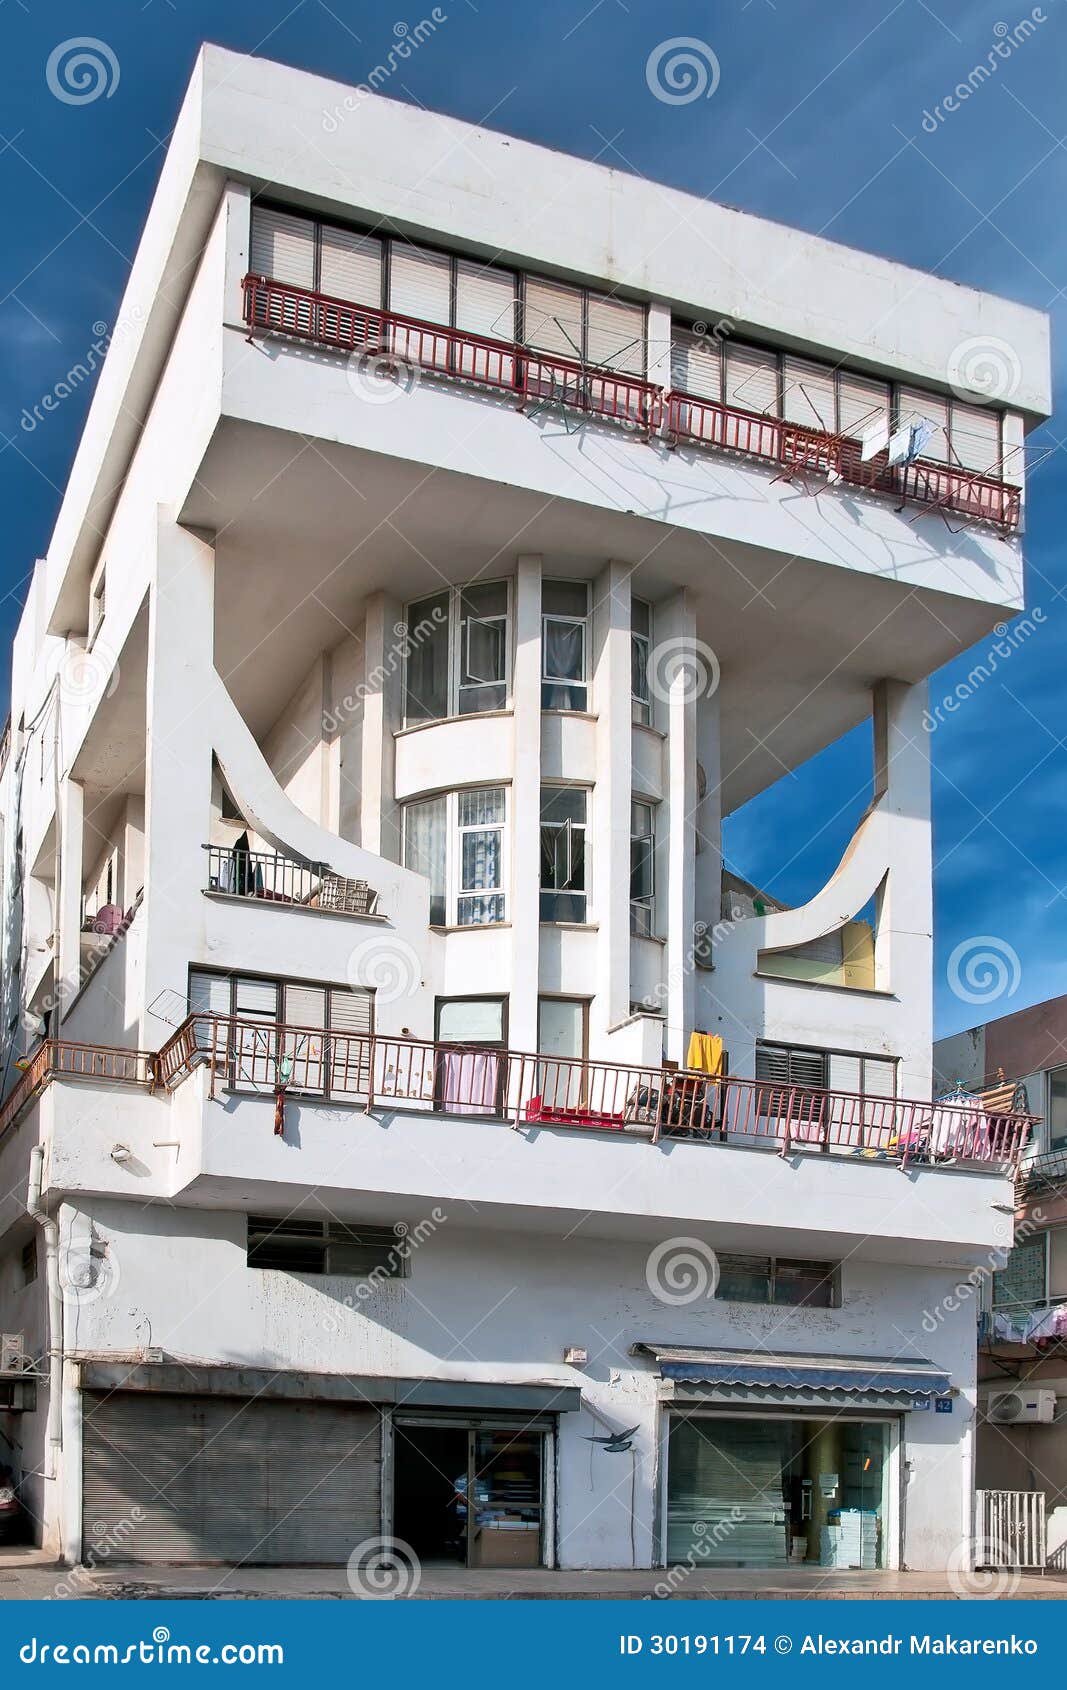 Style House Bauhaus.Tel Aviv Stock Images - Image: 30191174